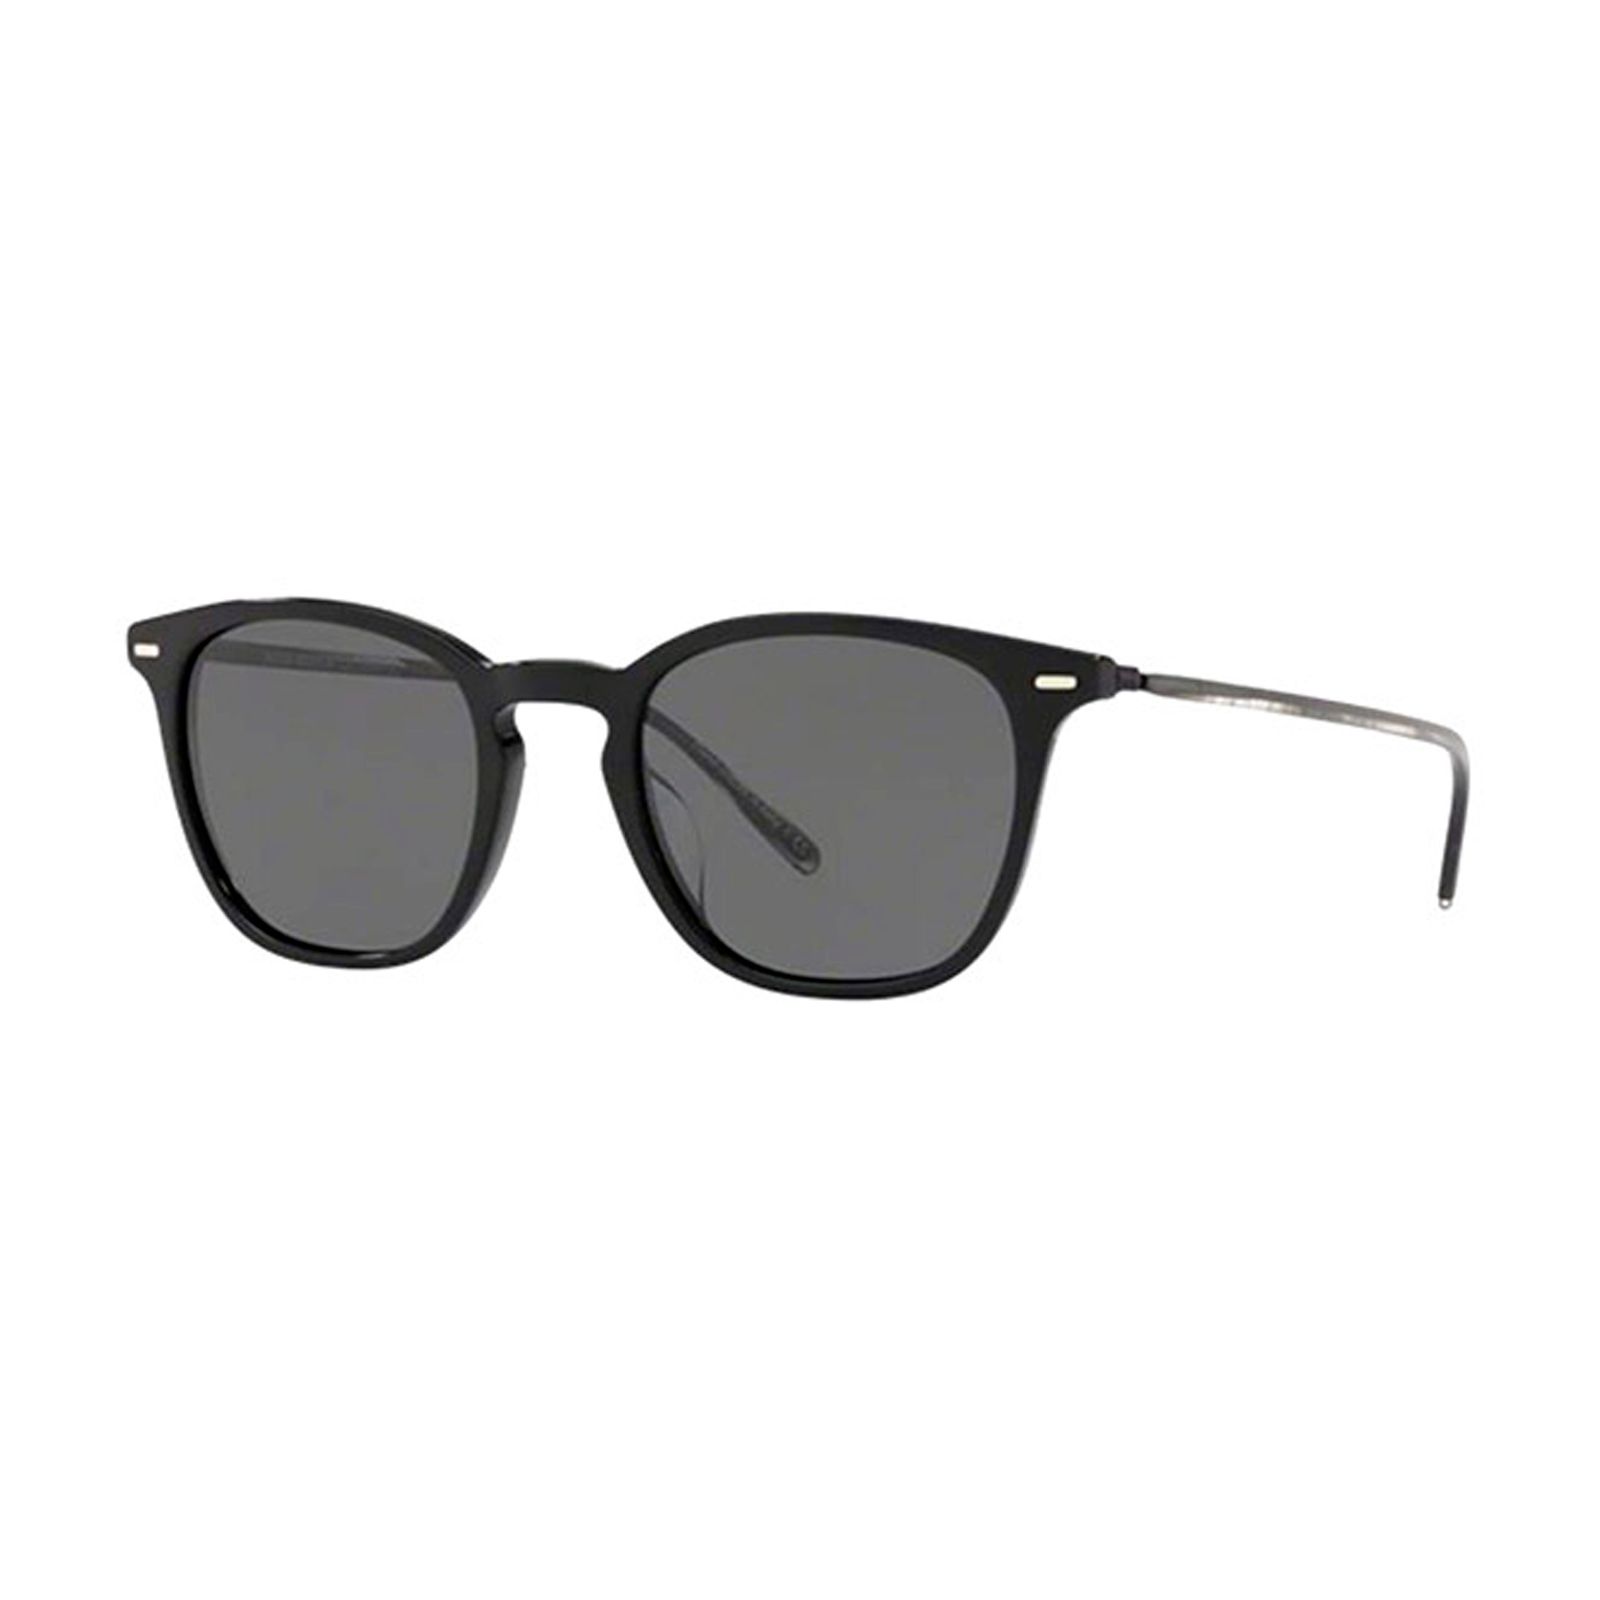 عینک آفتابی الیور پیپلز مدل OV5183V 001003 45 -  - 2